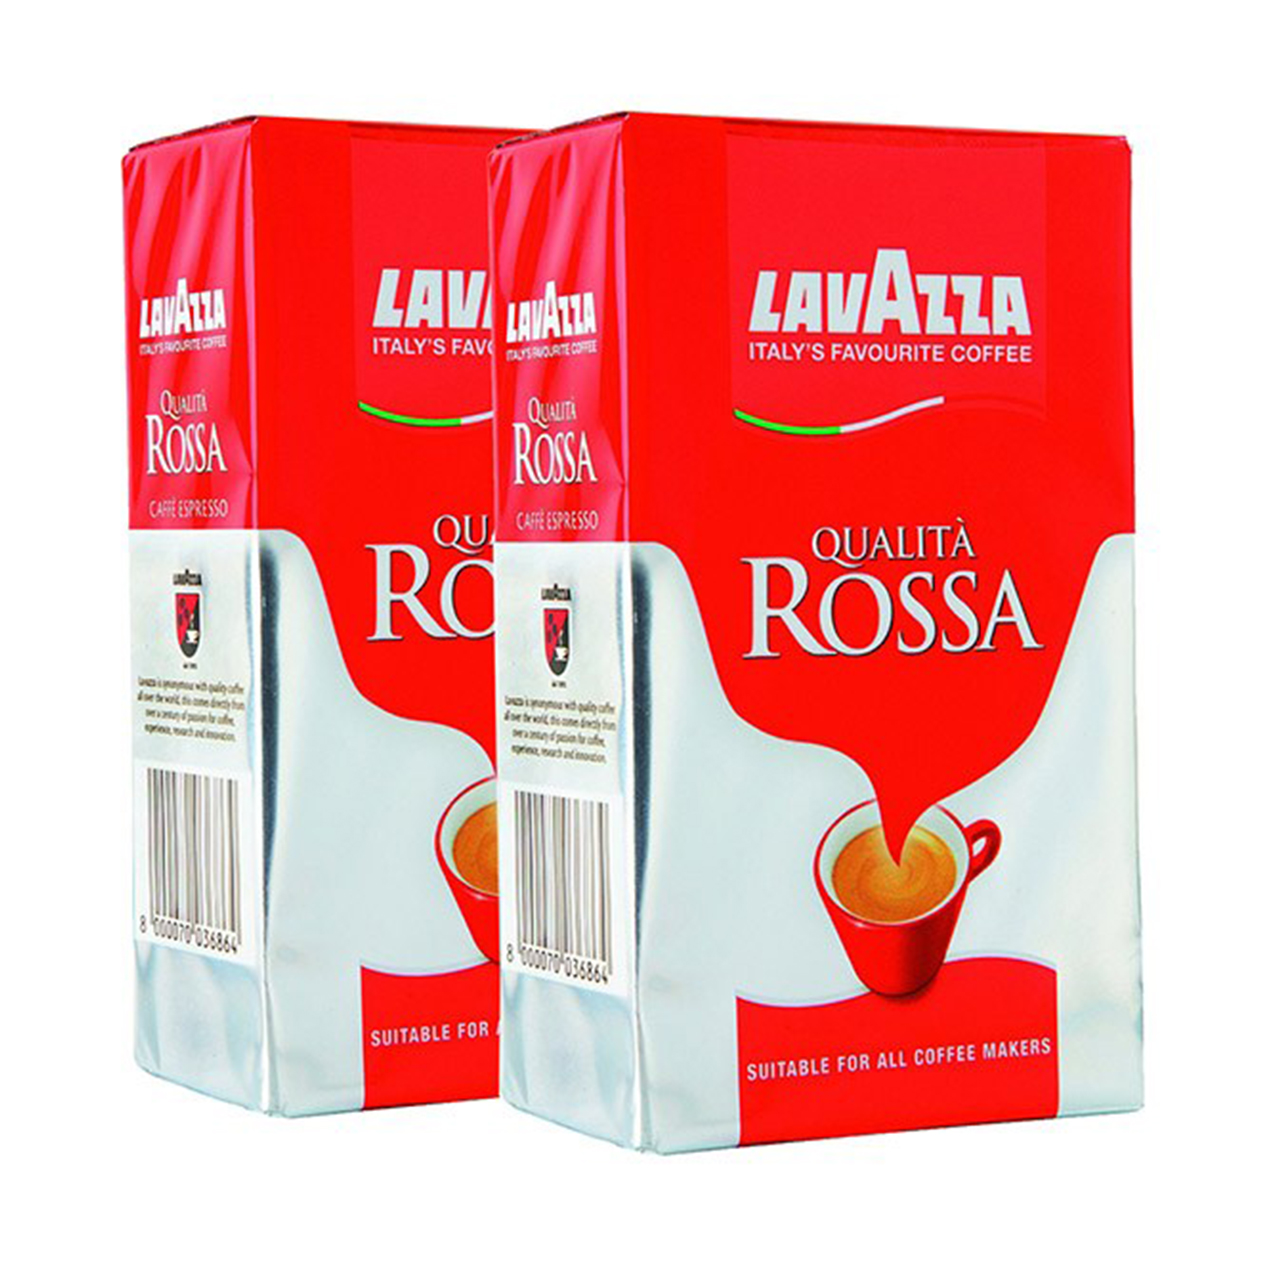 بسته قهوه لاواتزا مدل Rossa مجموعه 2 عددی